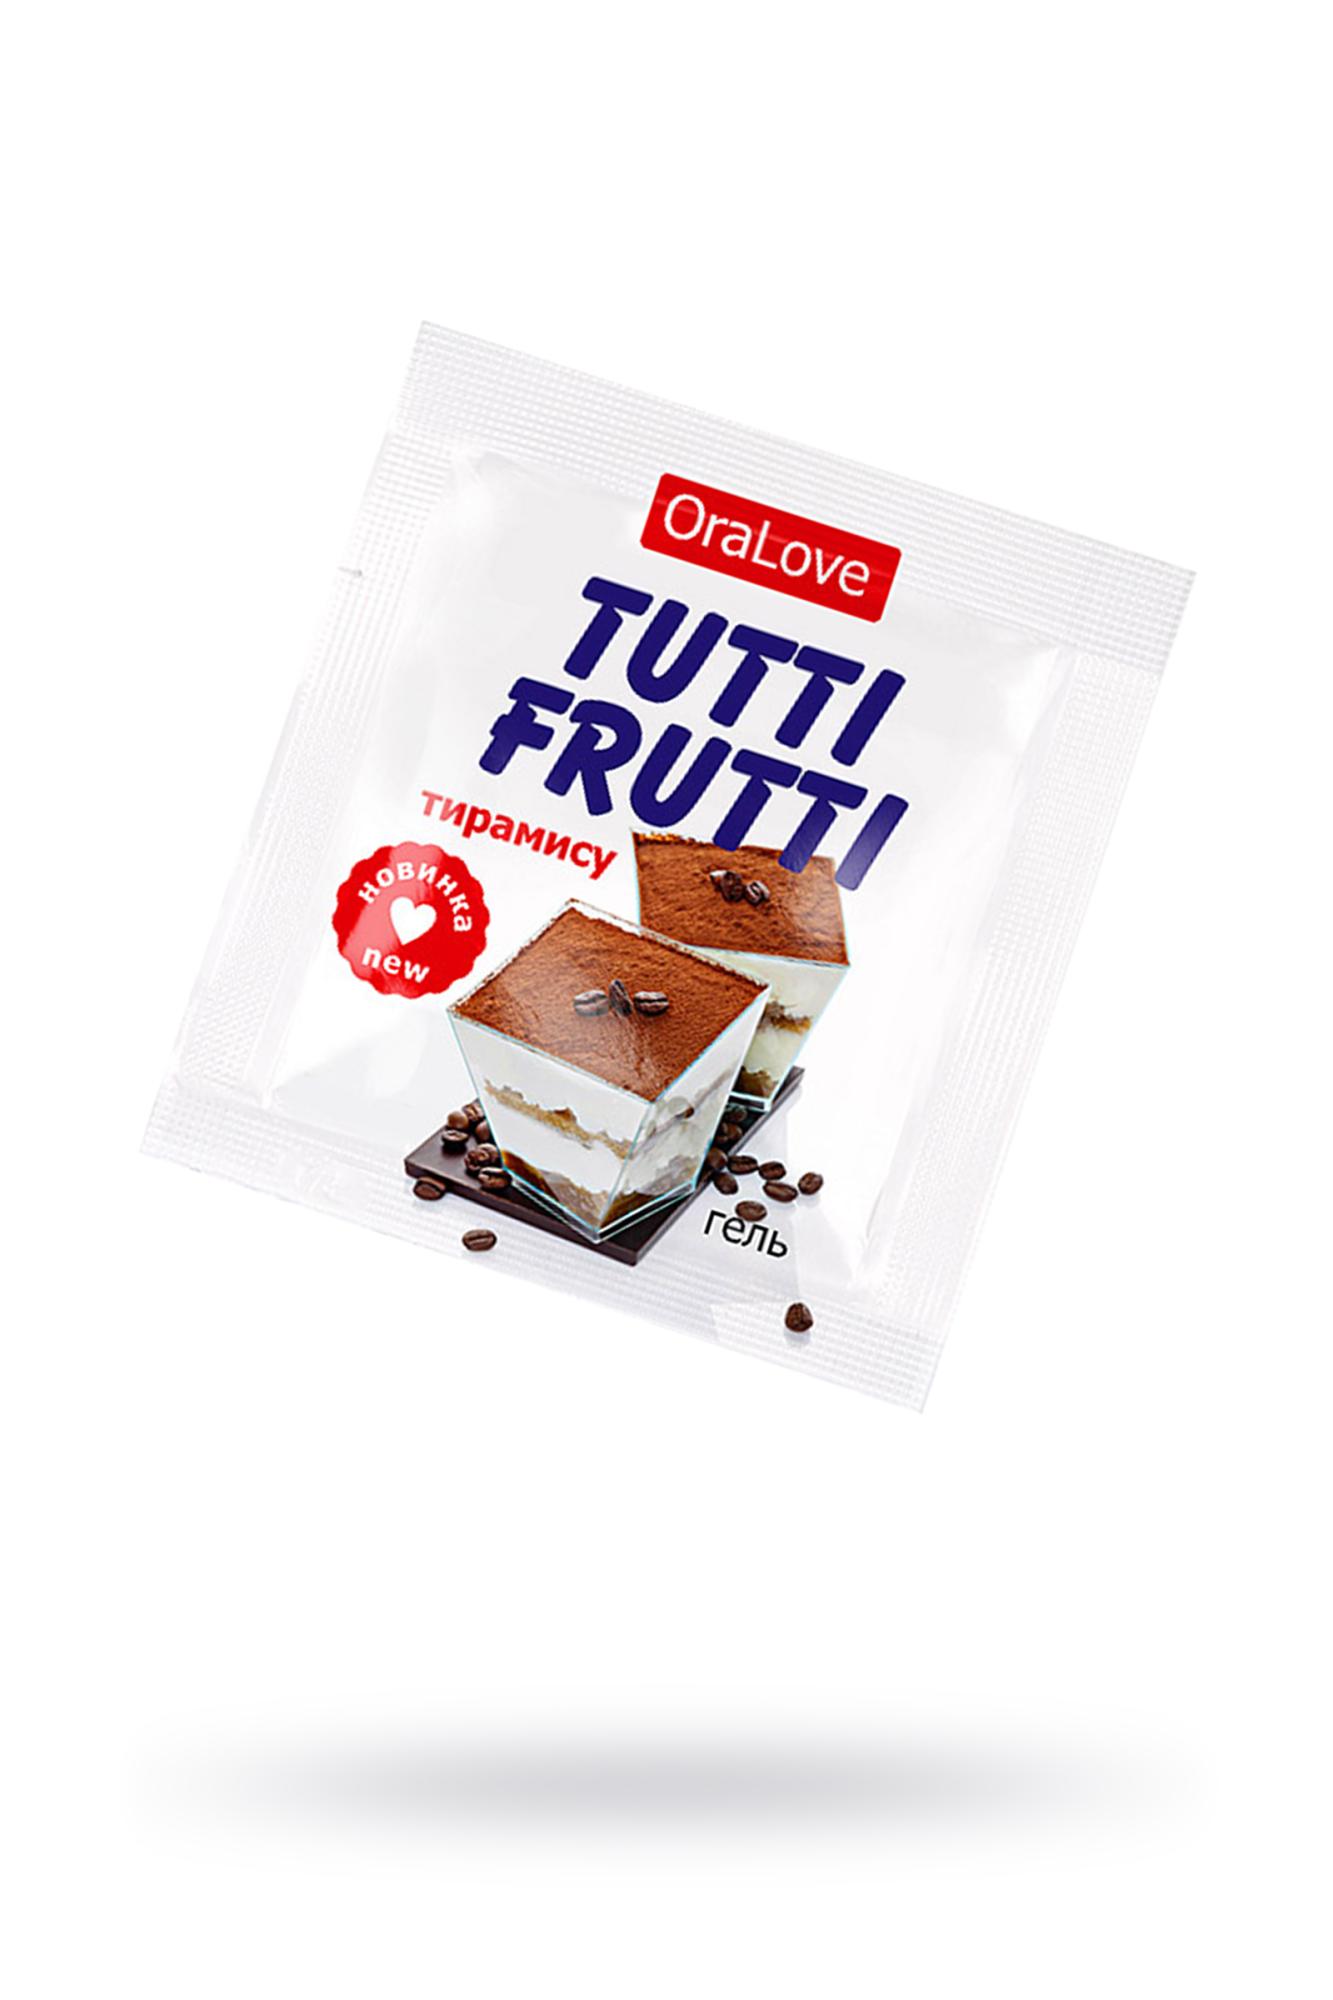 TUTTI-FRUTTI - Съедобная гель-смазка для орального секса со вкусом тирамису, 4 г 20 шт